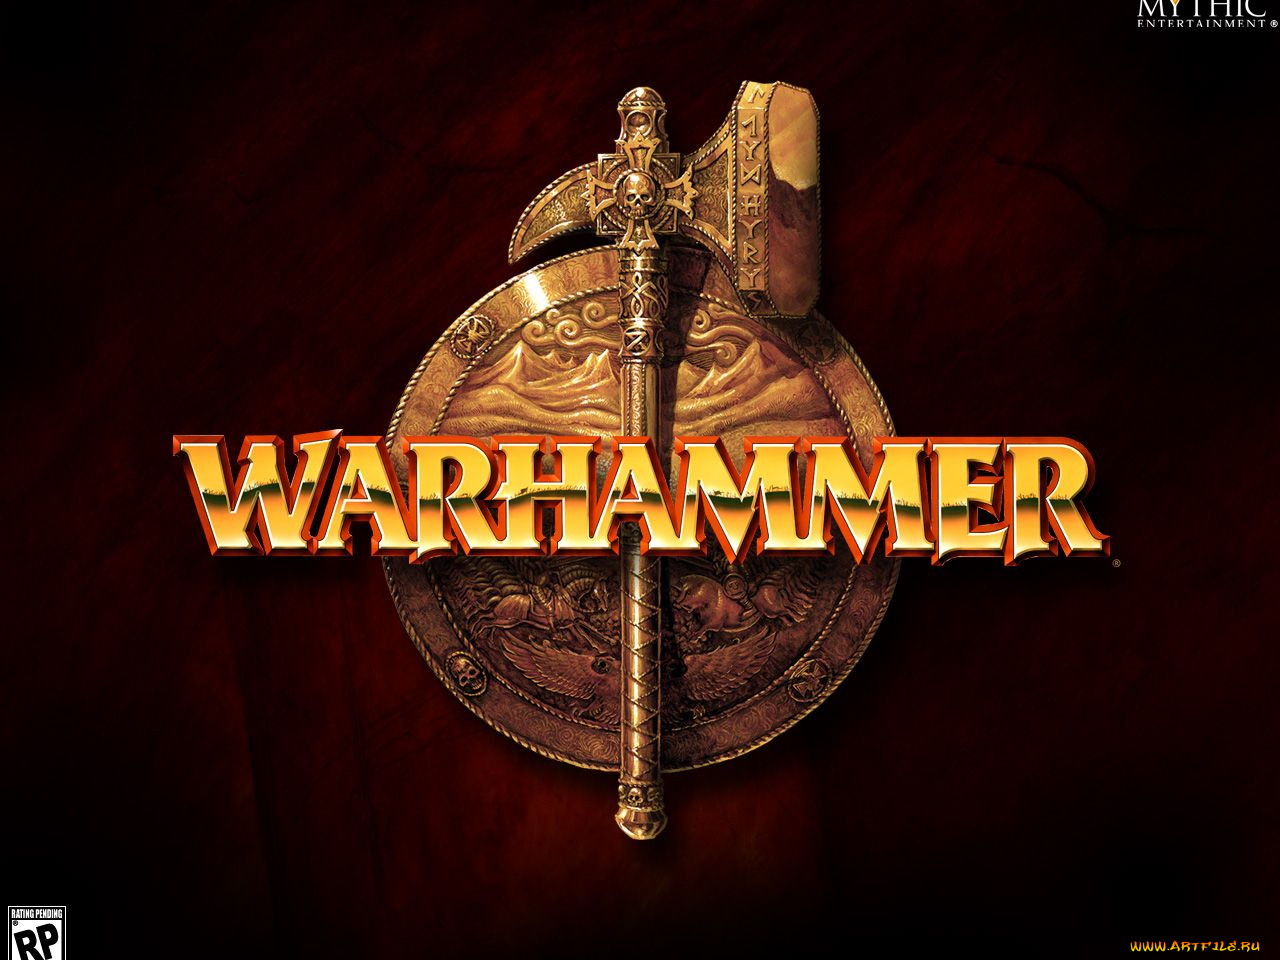 видео, игры, warhammer, online, age, of, reckoning